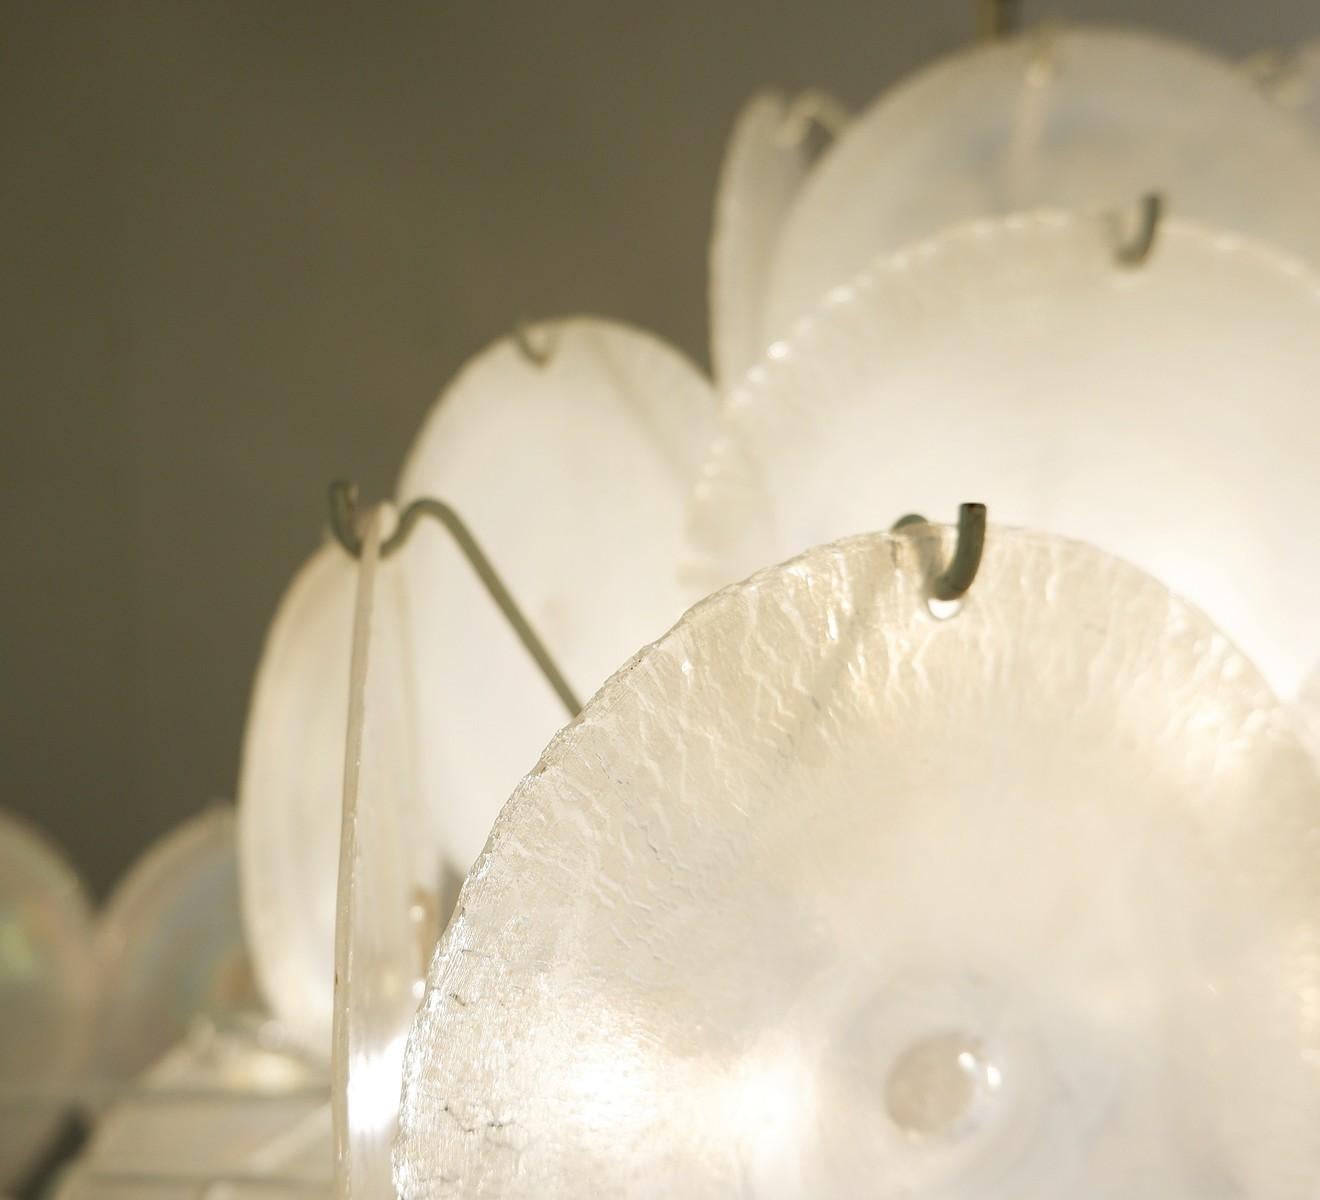 Nason chandelier with Murano glass discs, 1960s.